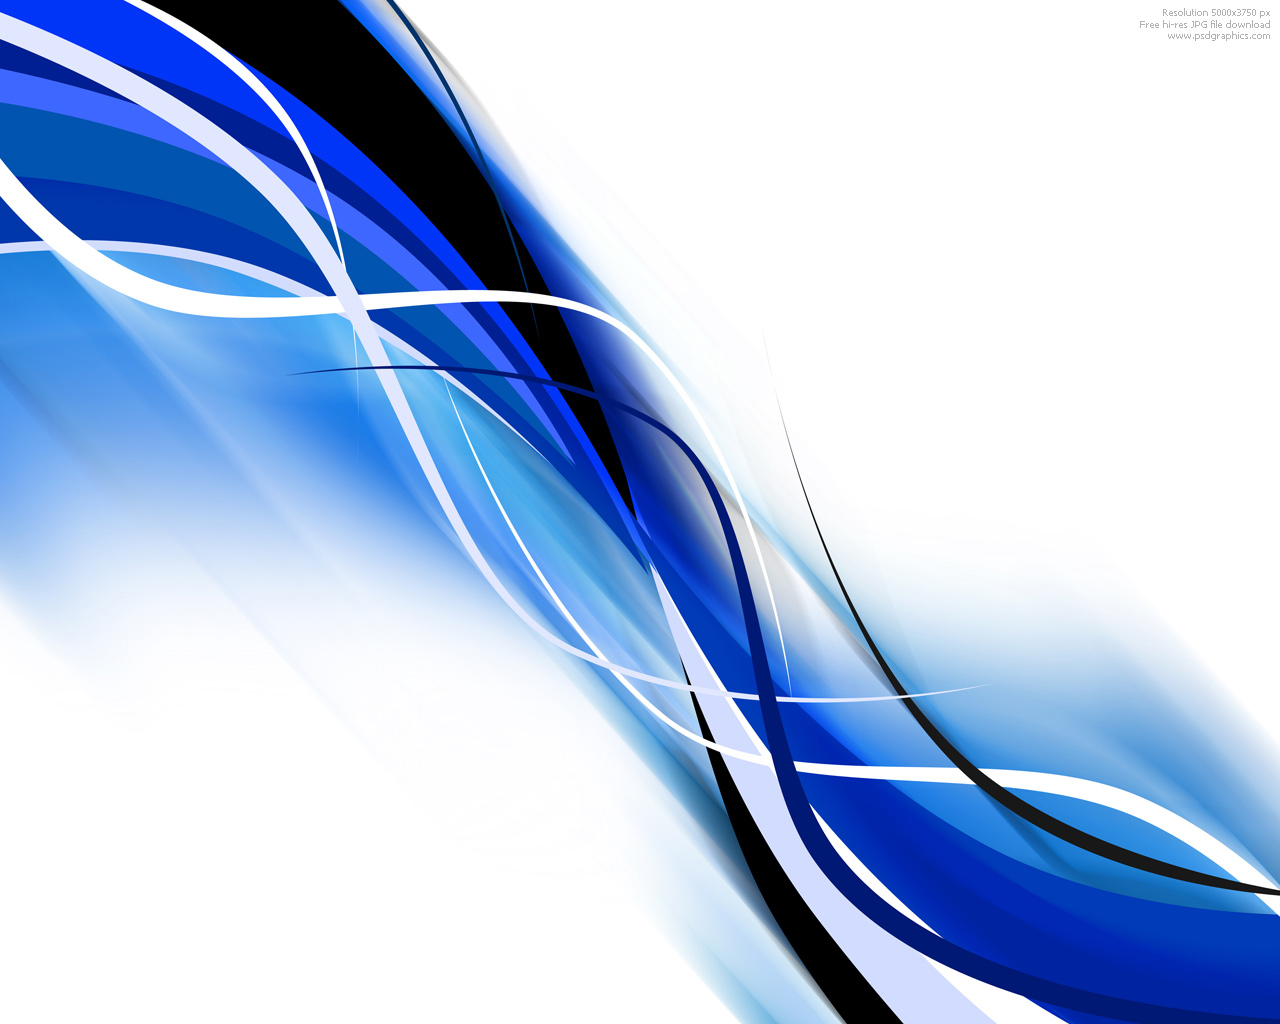 http://2.bp.blogspot.com/-sqfV5EnU_Yo/USJVBf_MYAI/AAAAAAAAAq8/Xj3HlTBs4k0/s1600/blue_abstract_background_wallpaper-normal5.4.jpg